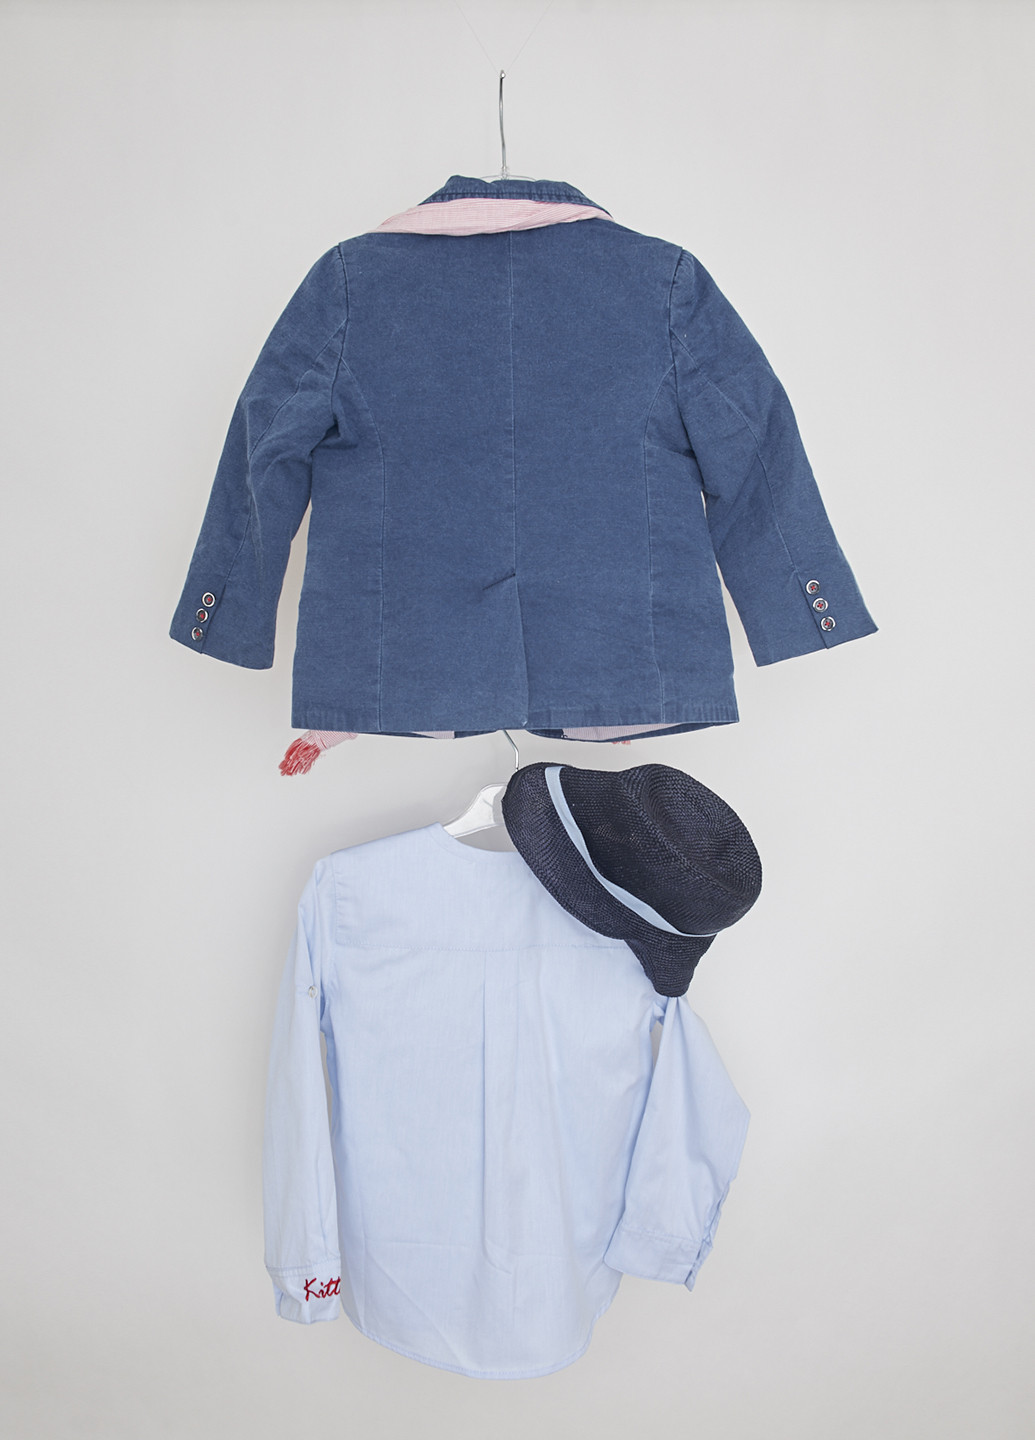 Синий демисезонный комплект (пиджак, рубашка, шарф, шляпа) Kitten